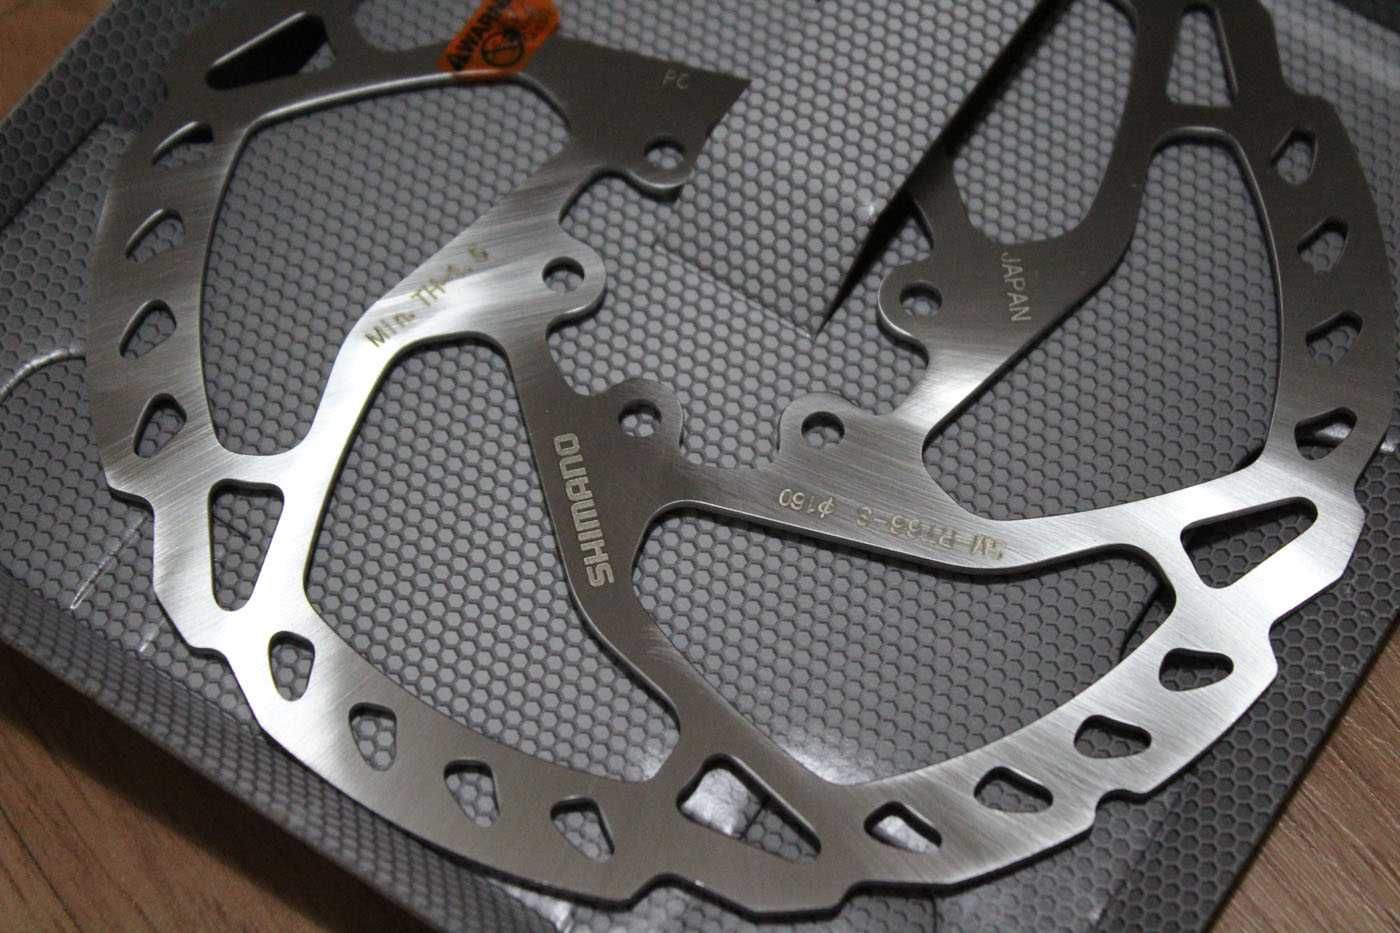 Shimano SLX disc 160mm SM-RT66 rotor disc bicicleta